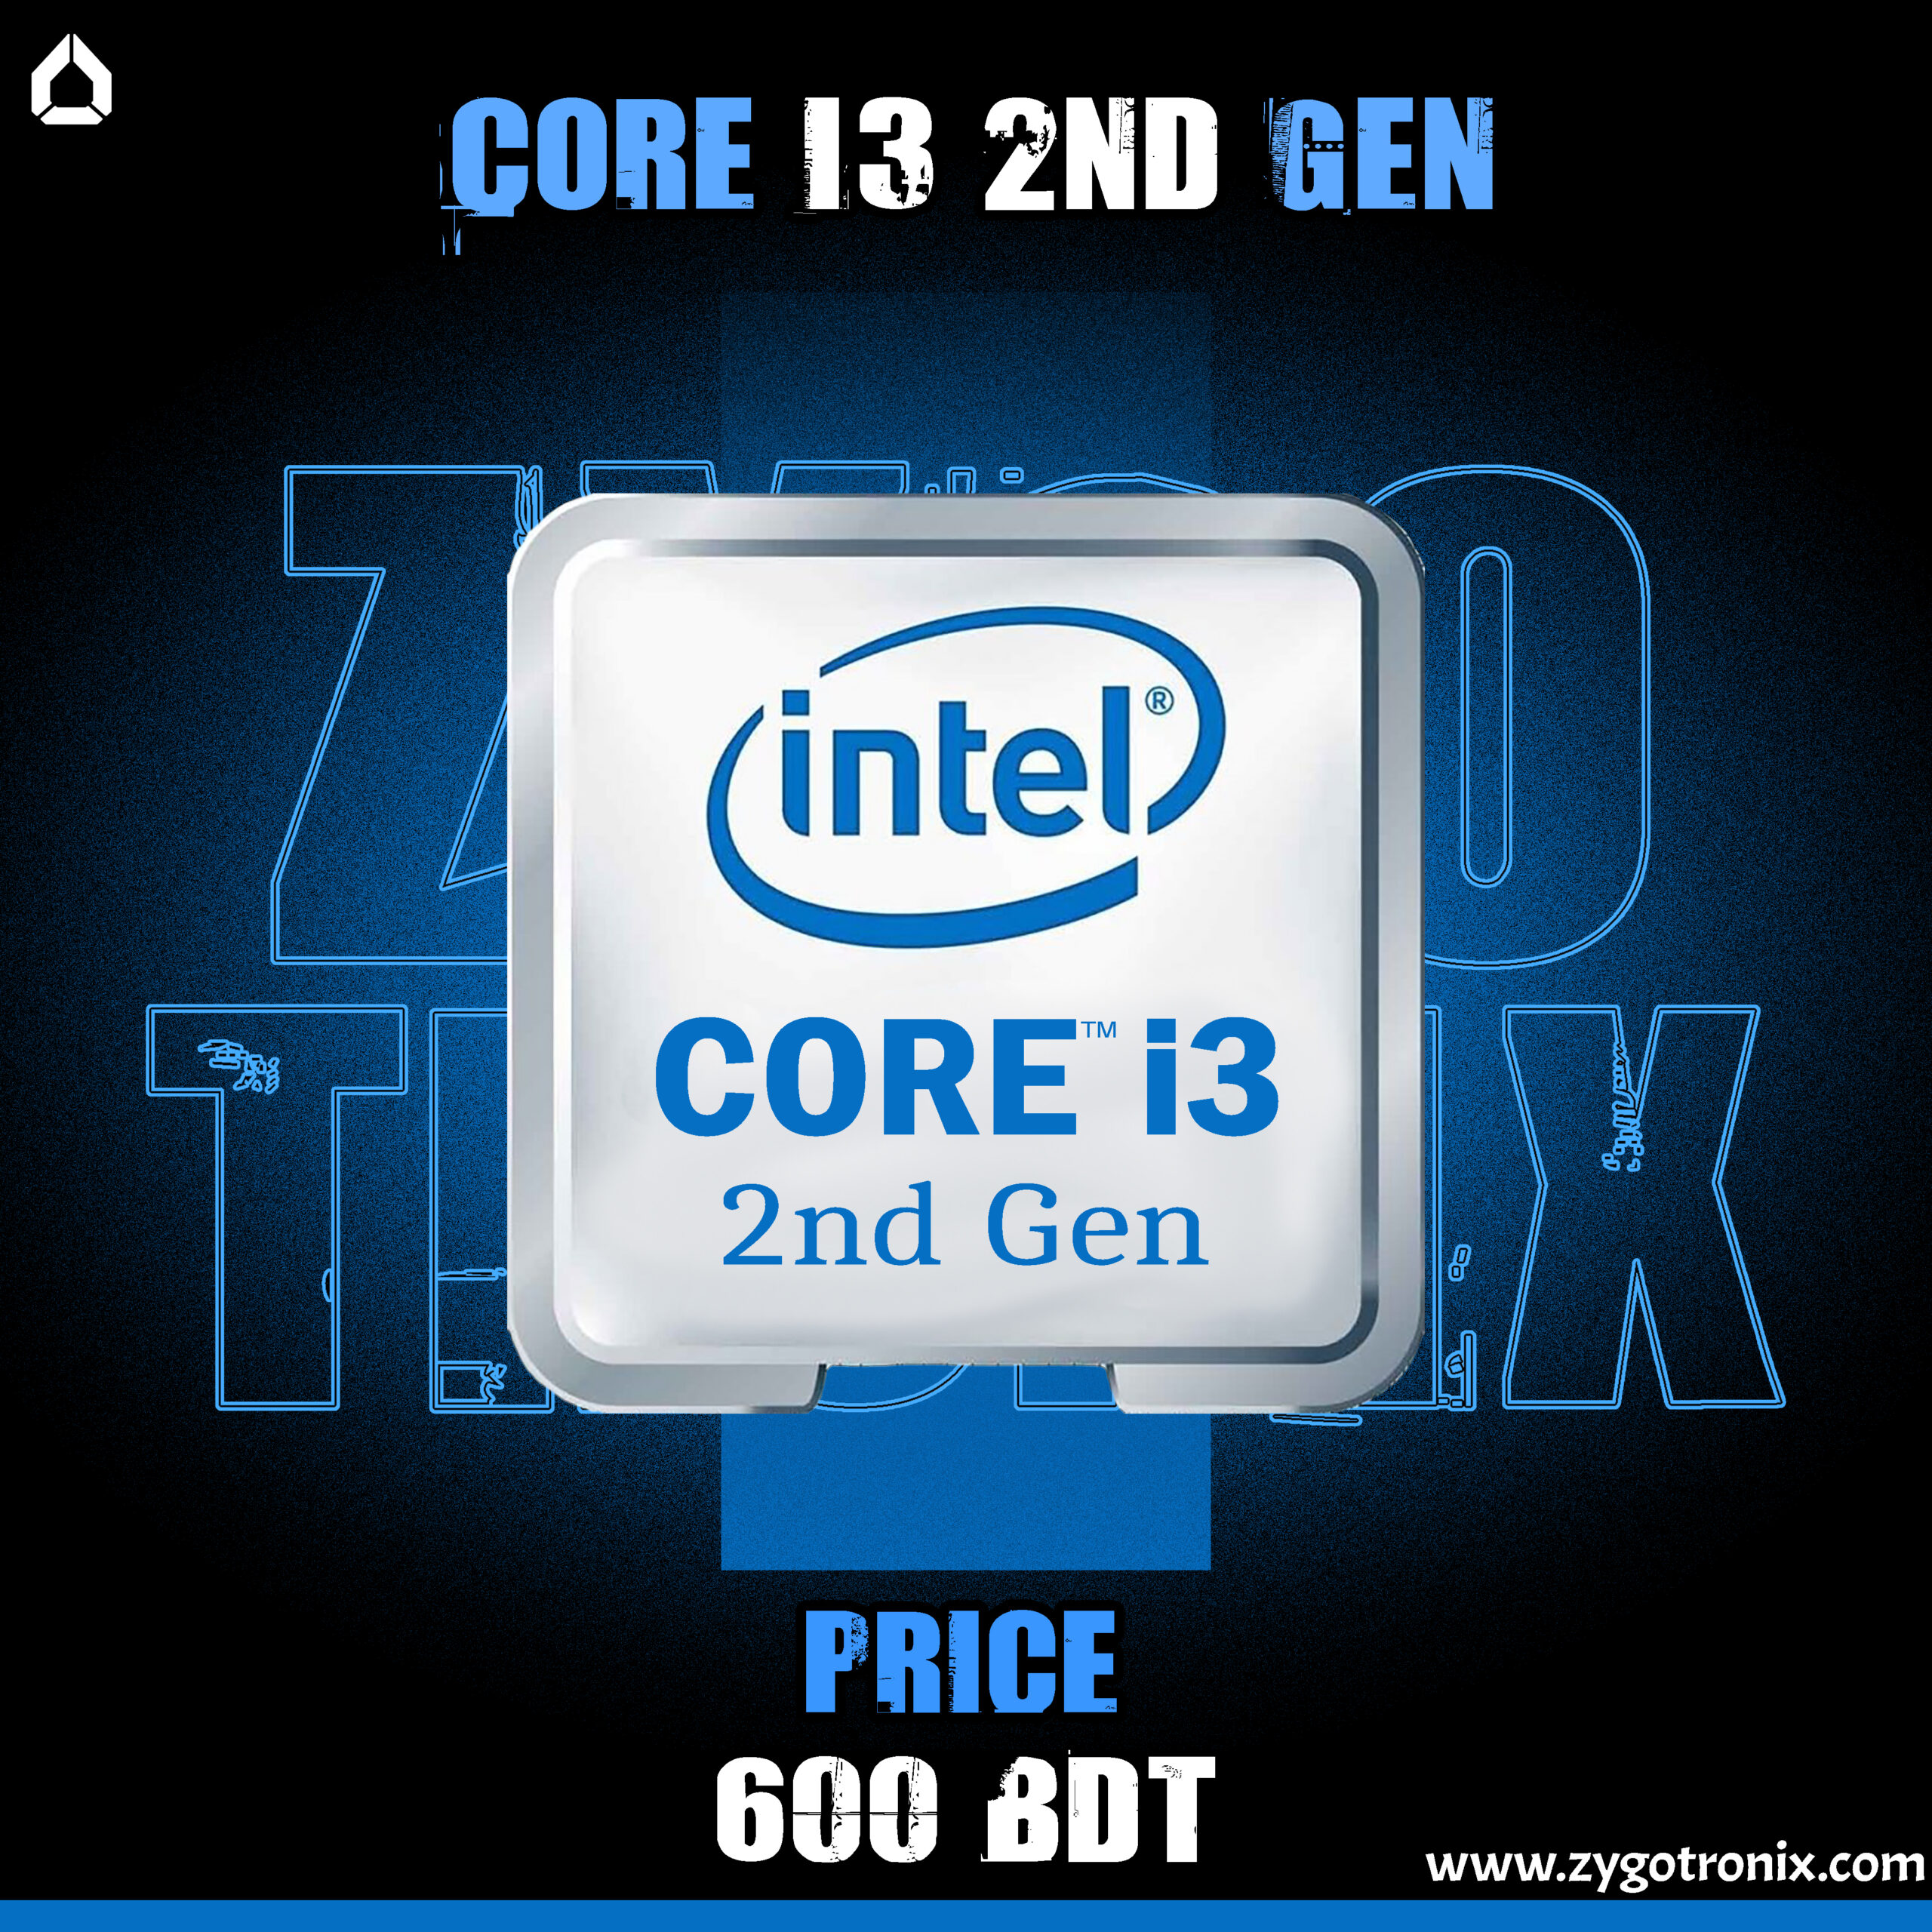 Intel Core i3 Processor 2nd Gen